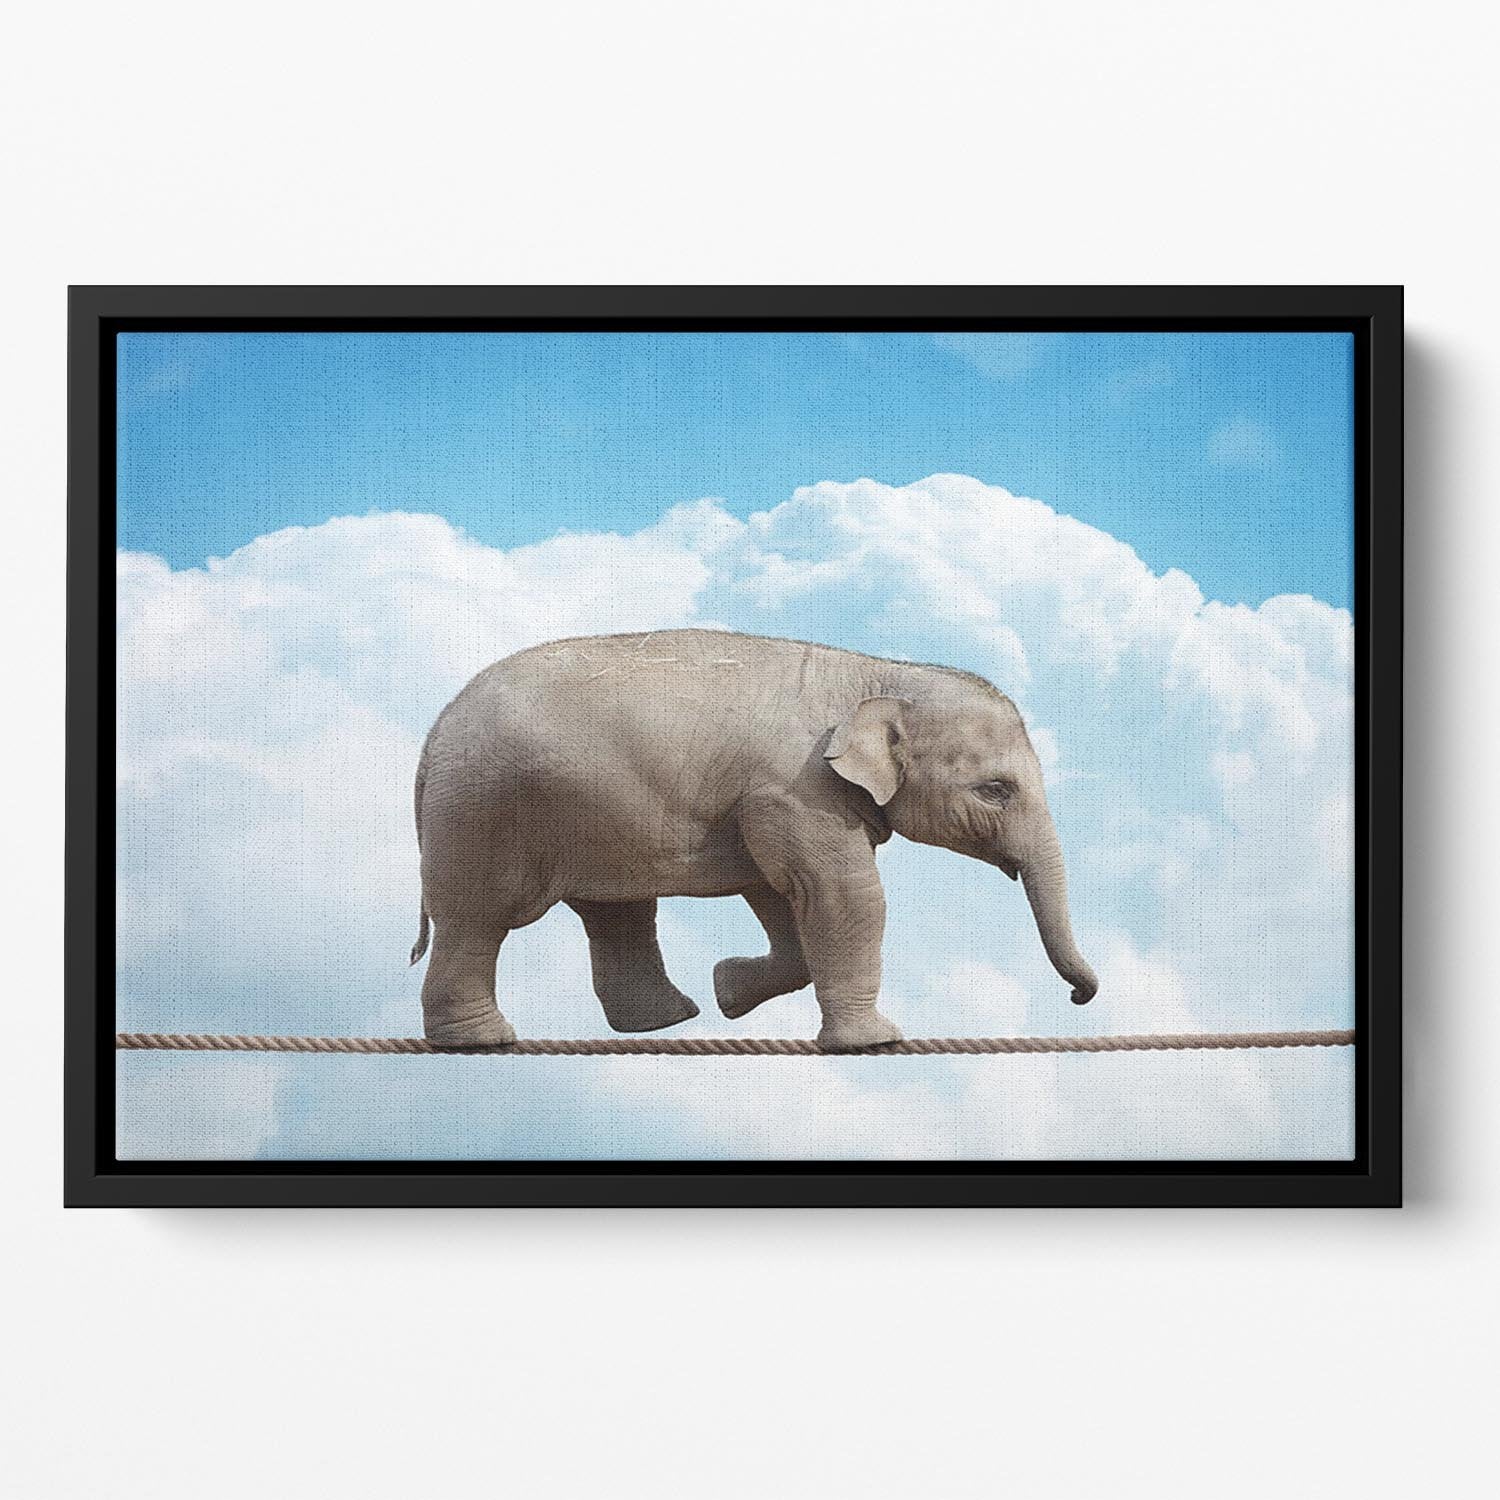 Elehant calf balancing on a tightrope Floating Framed Canvas - Canvas Art Rocks - 2